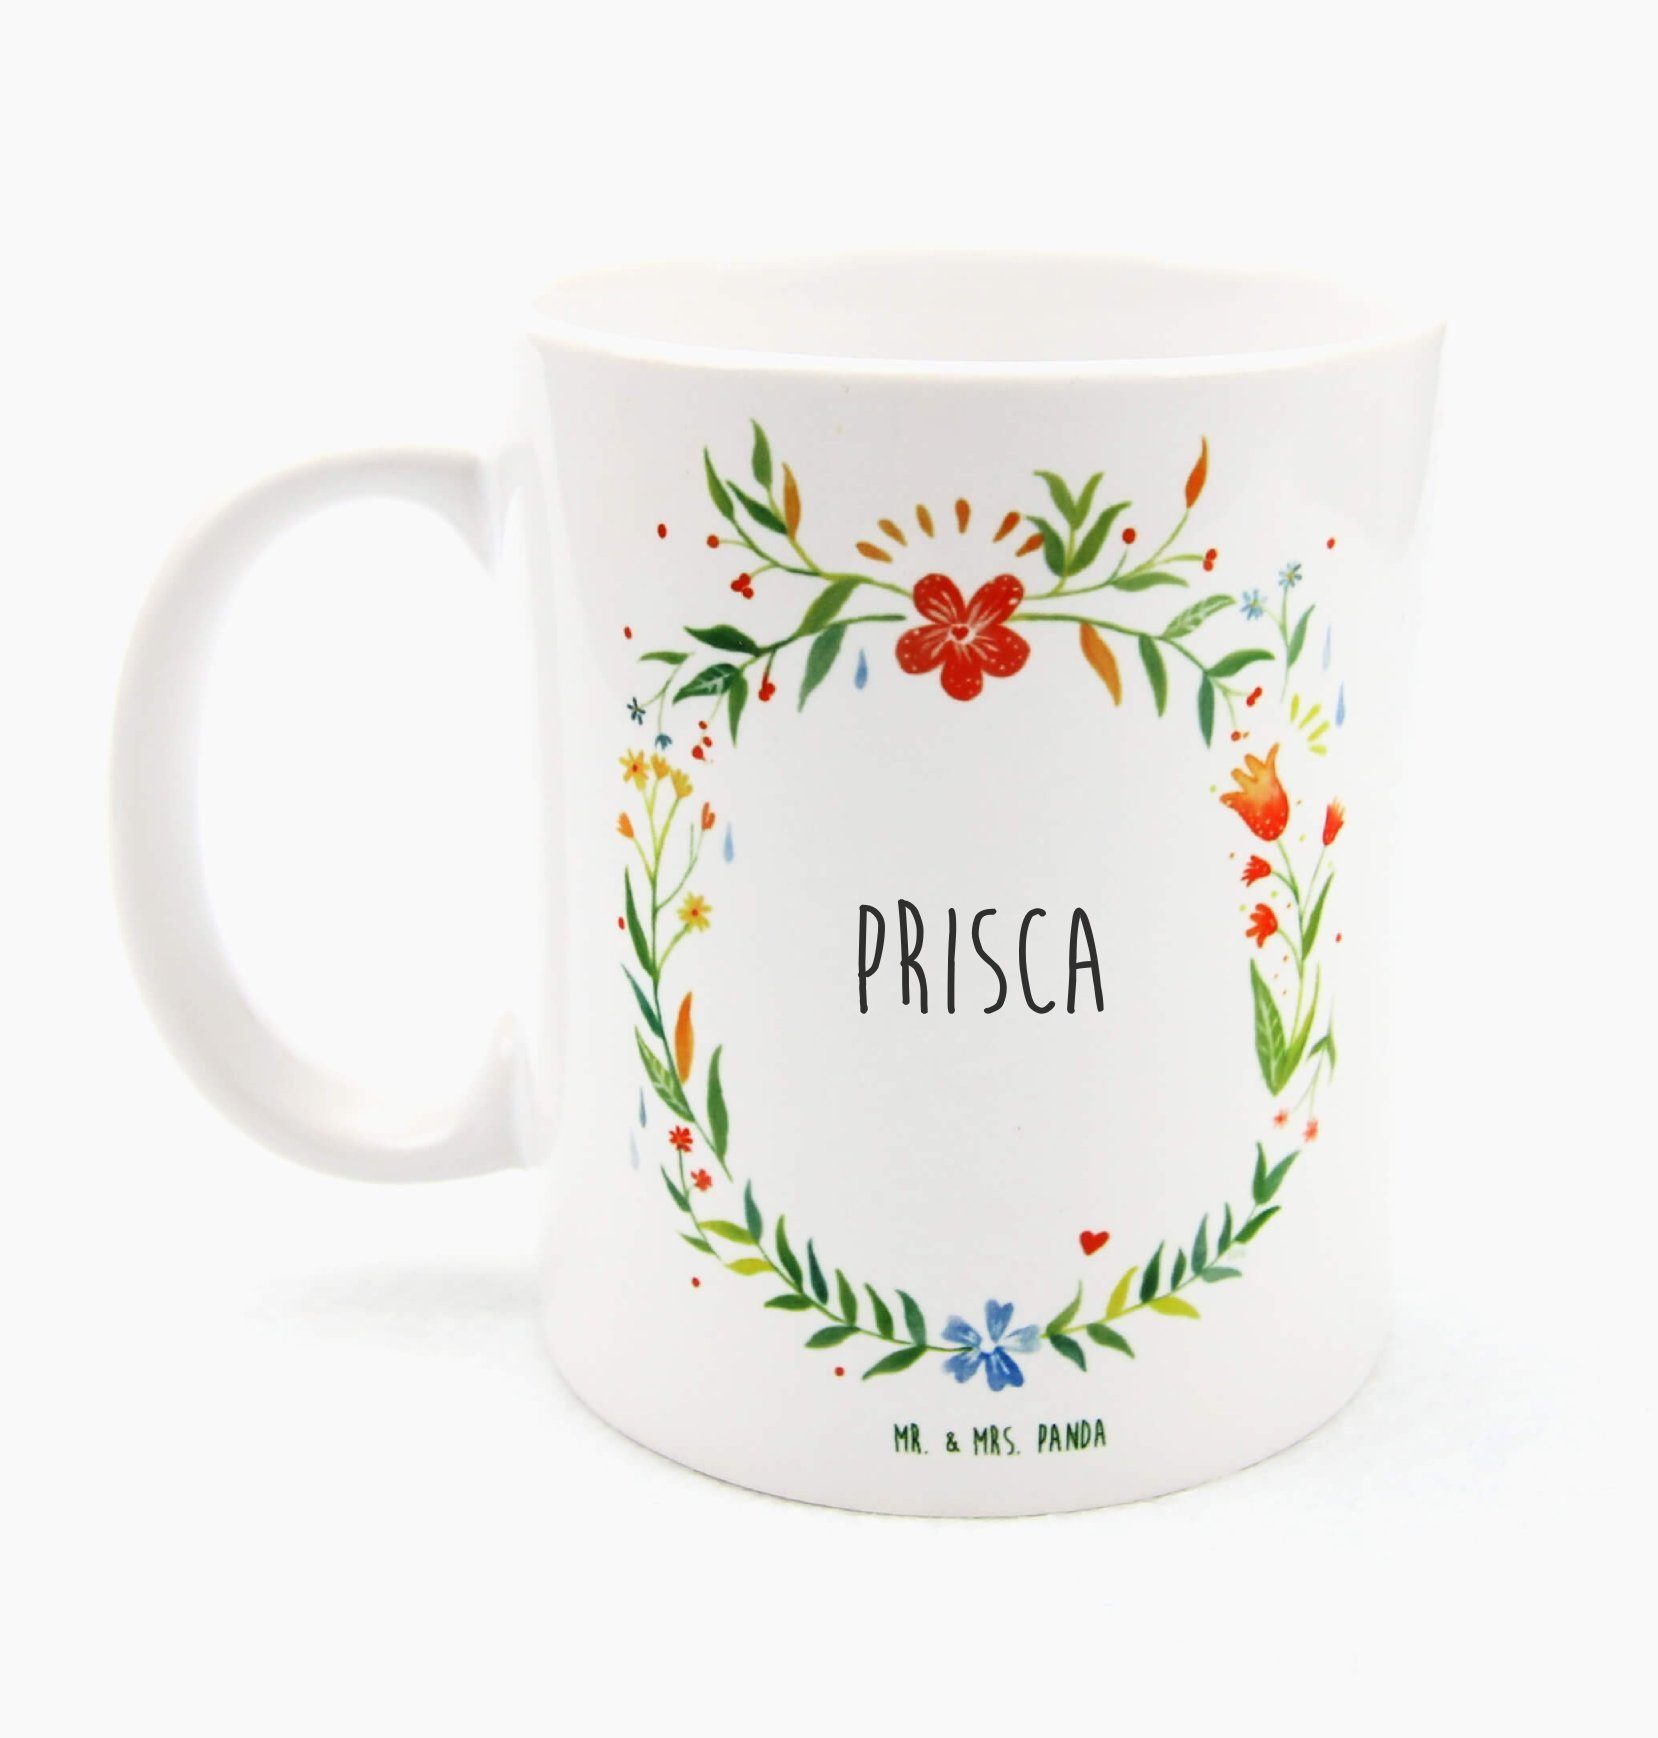 Mr. & Mrs. Panda Tasse Prisca - Geschenk, Teetasse, Keramiktasse, Becher, Büro Tasse, Kaffee, Keramik